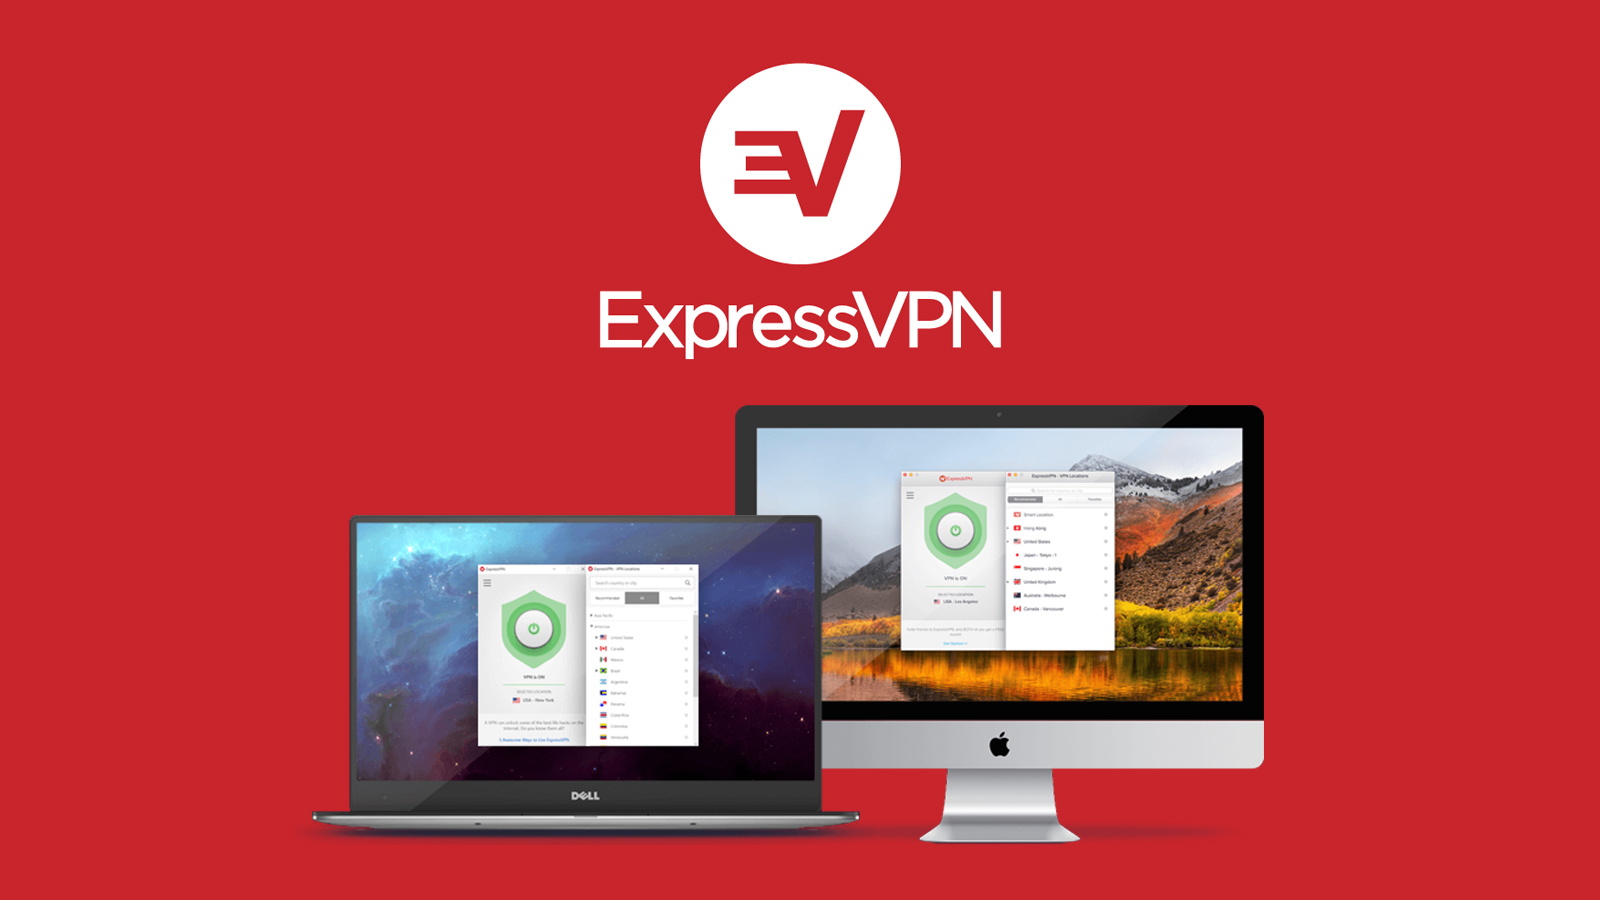 express vpn activation code not saving